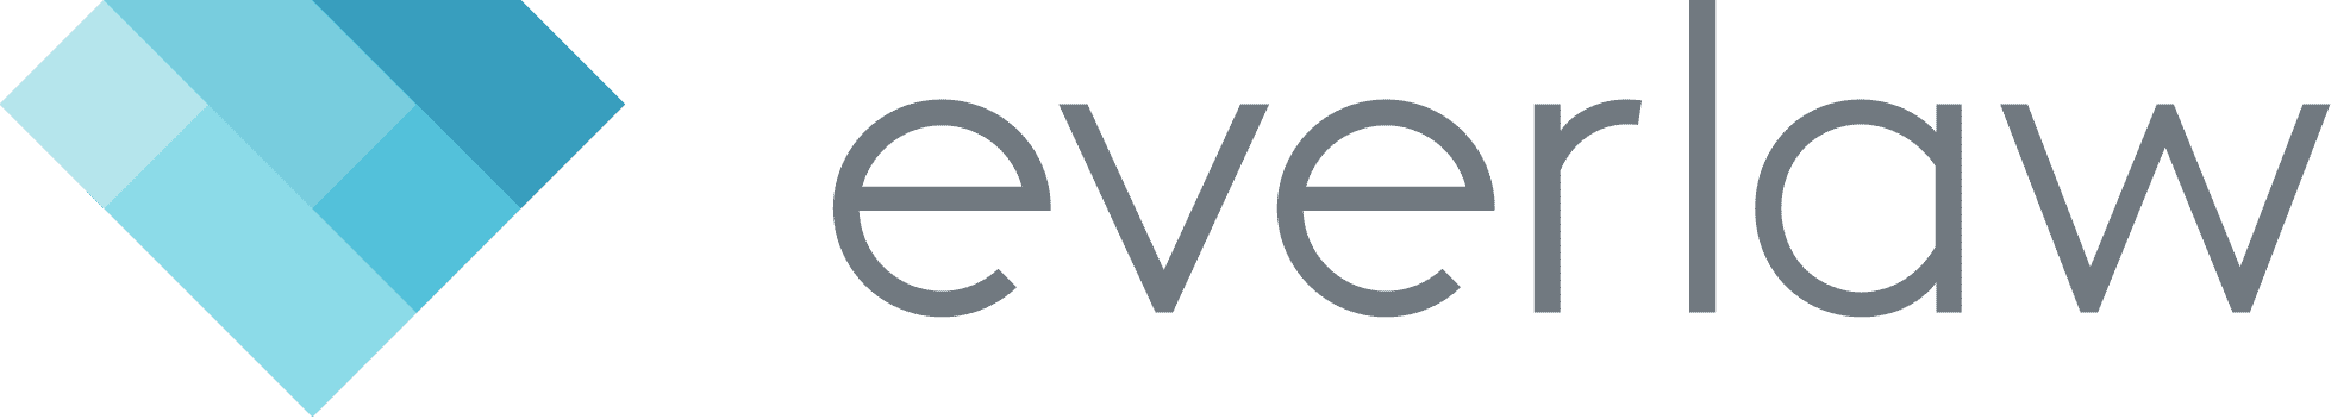 everlaw logo1 05